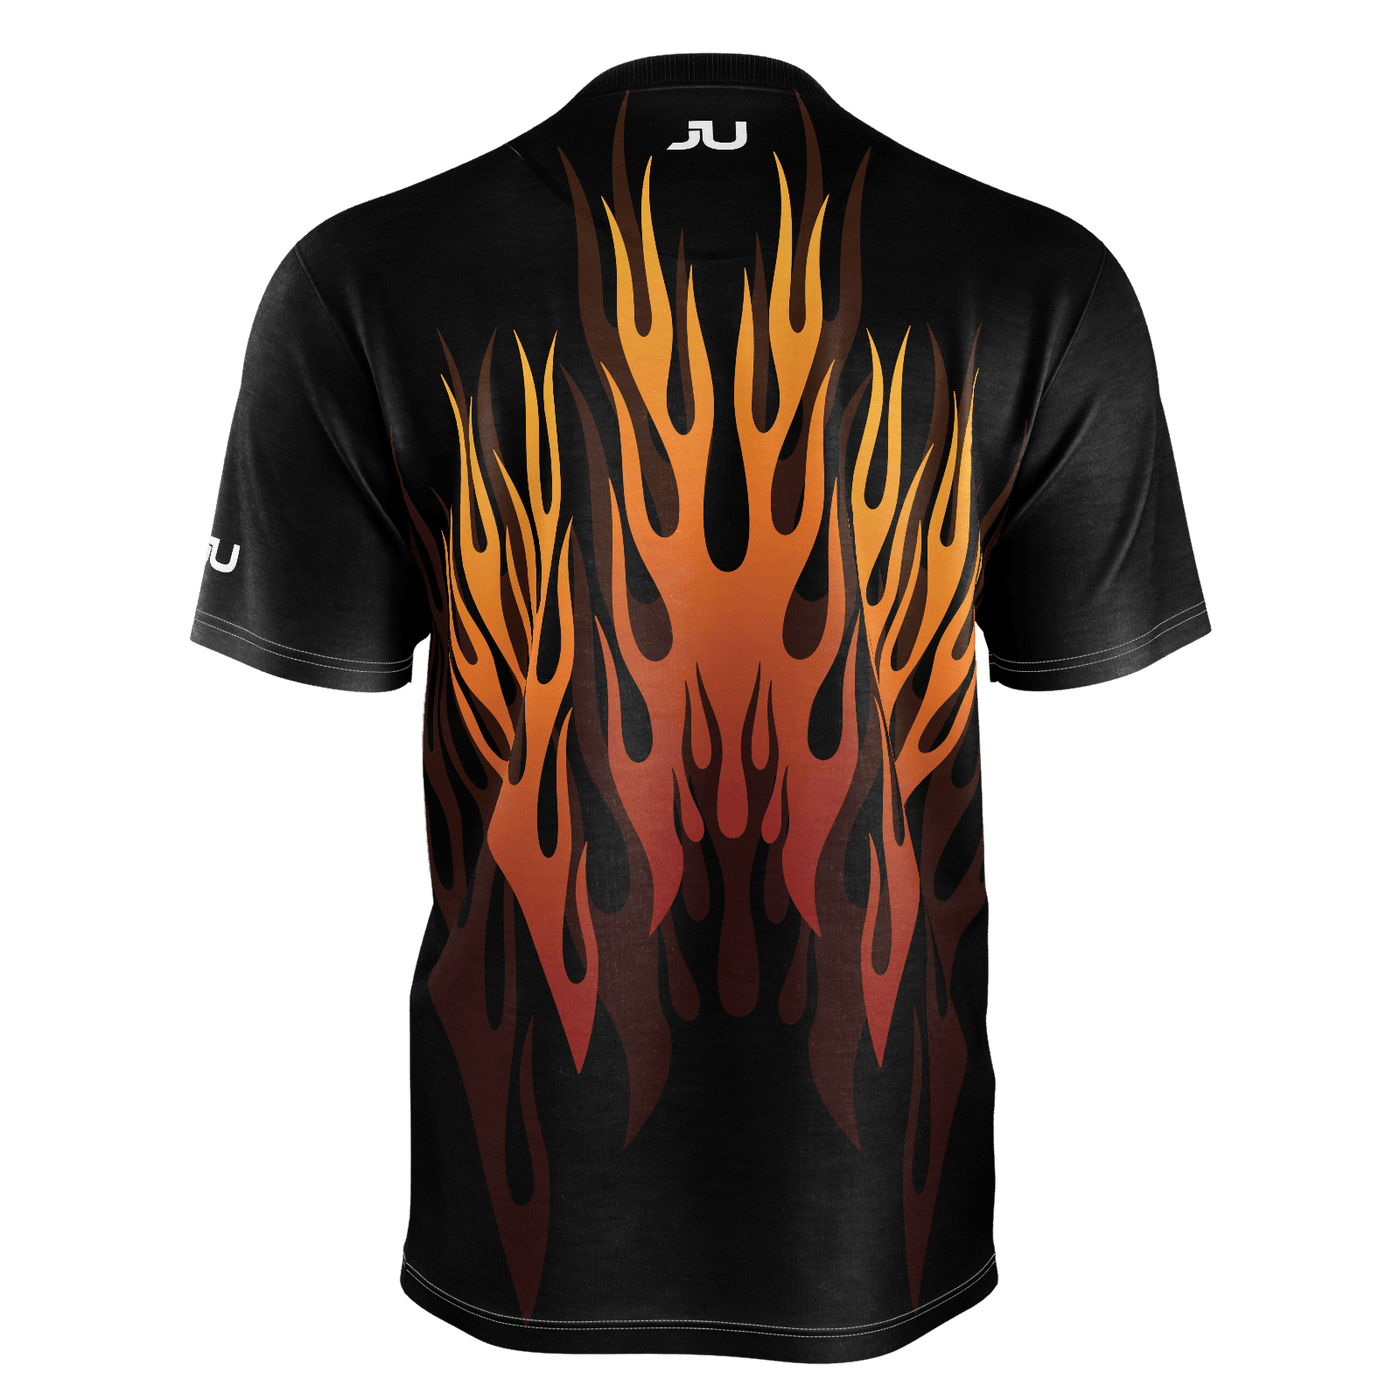 Flames Team Tee Shirts